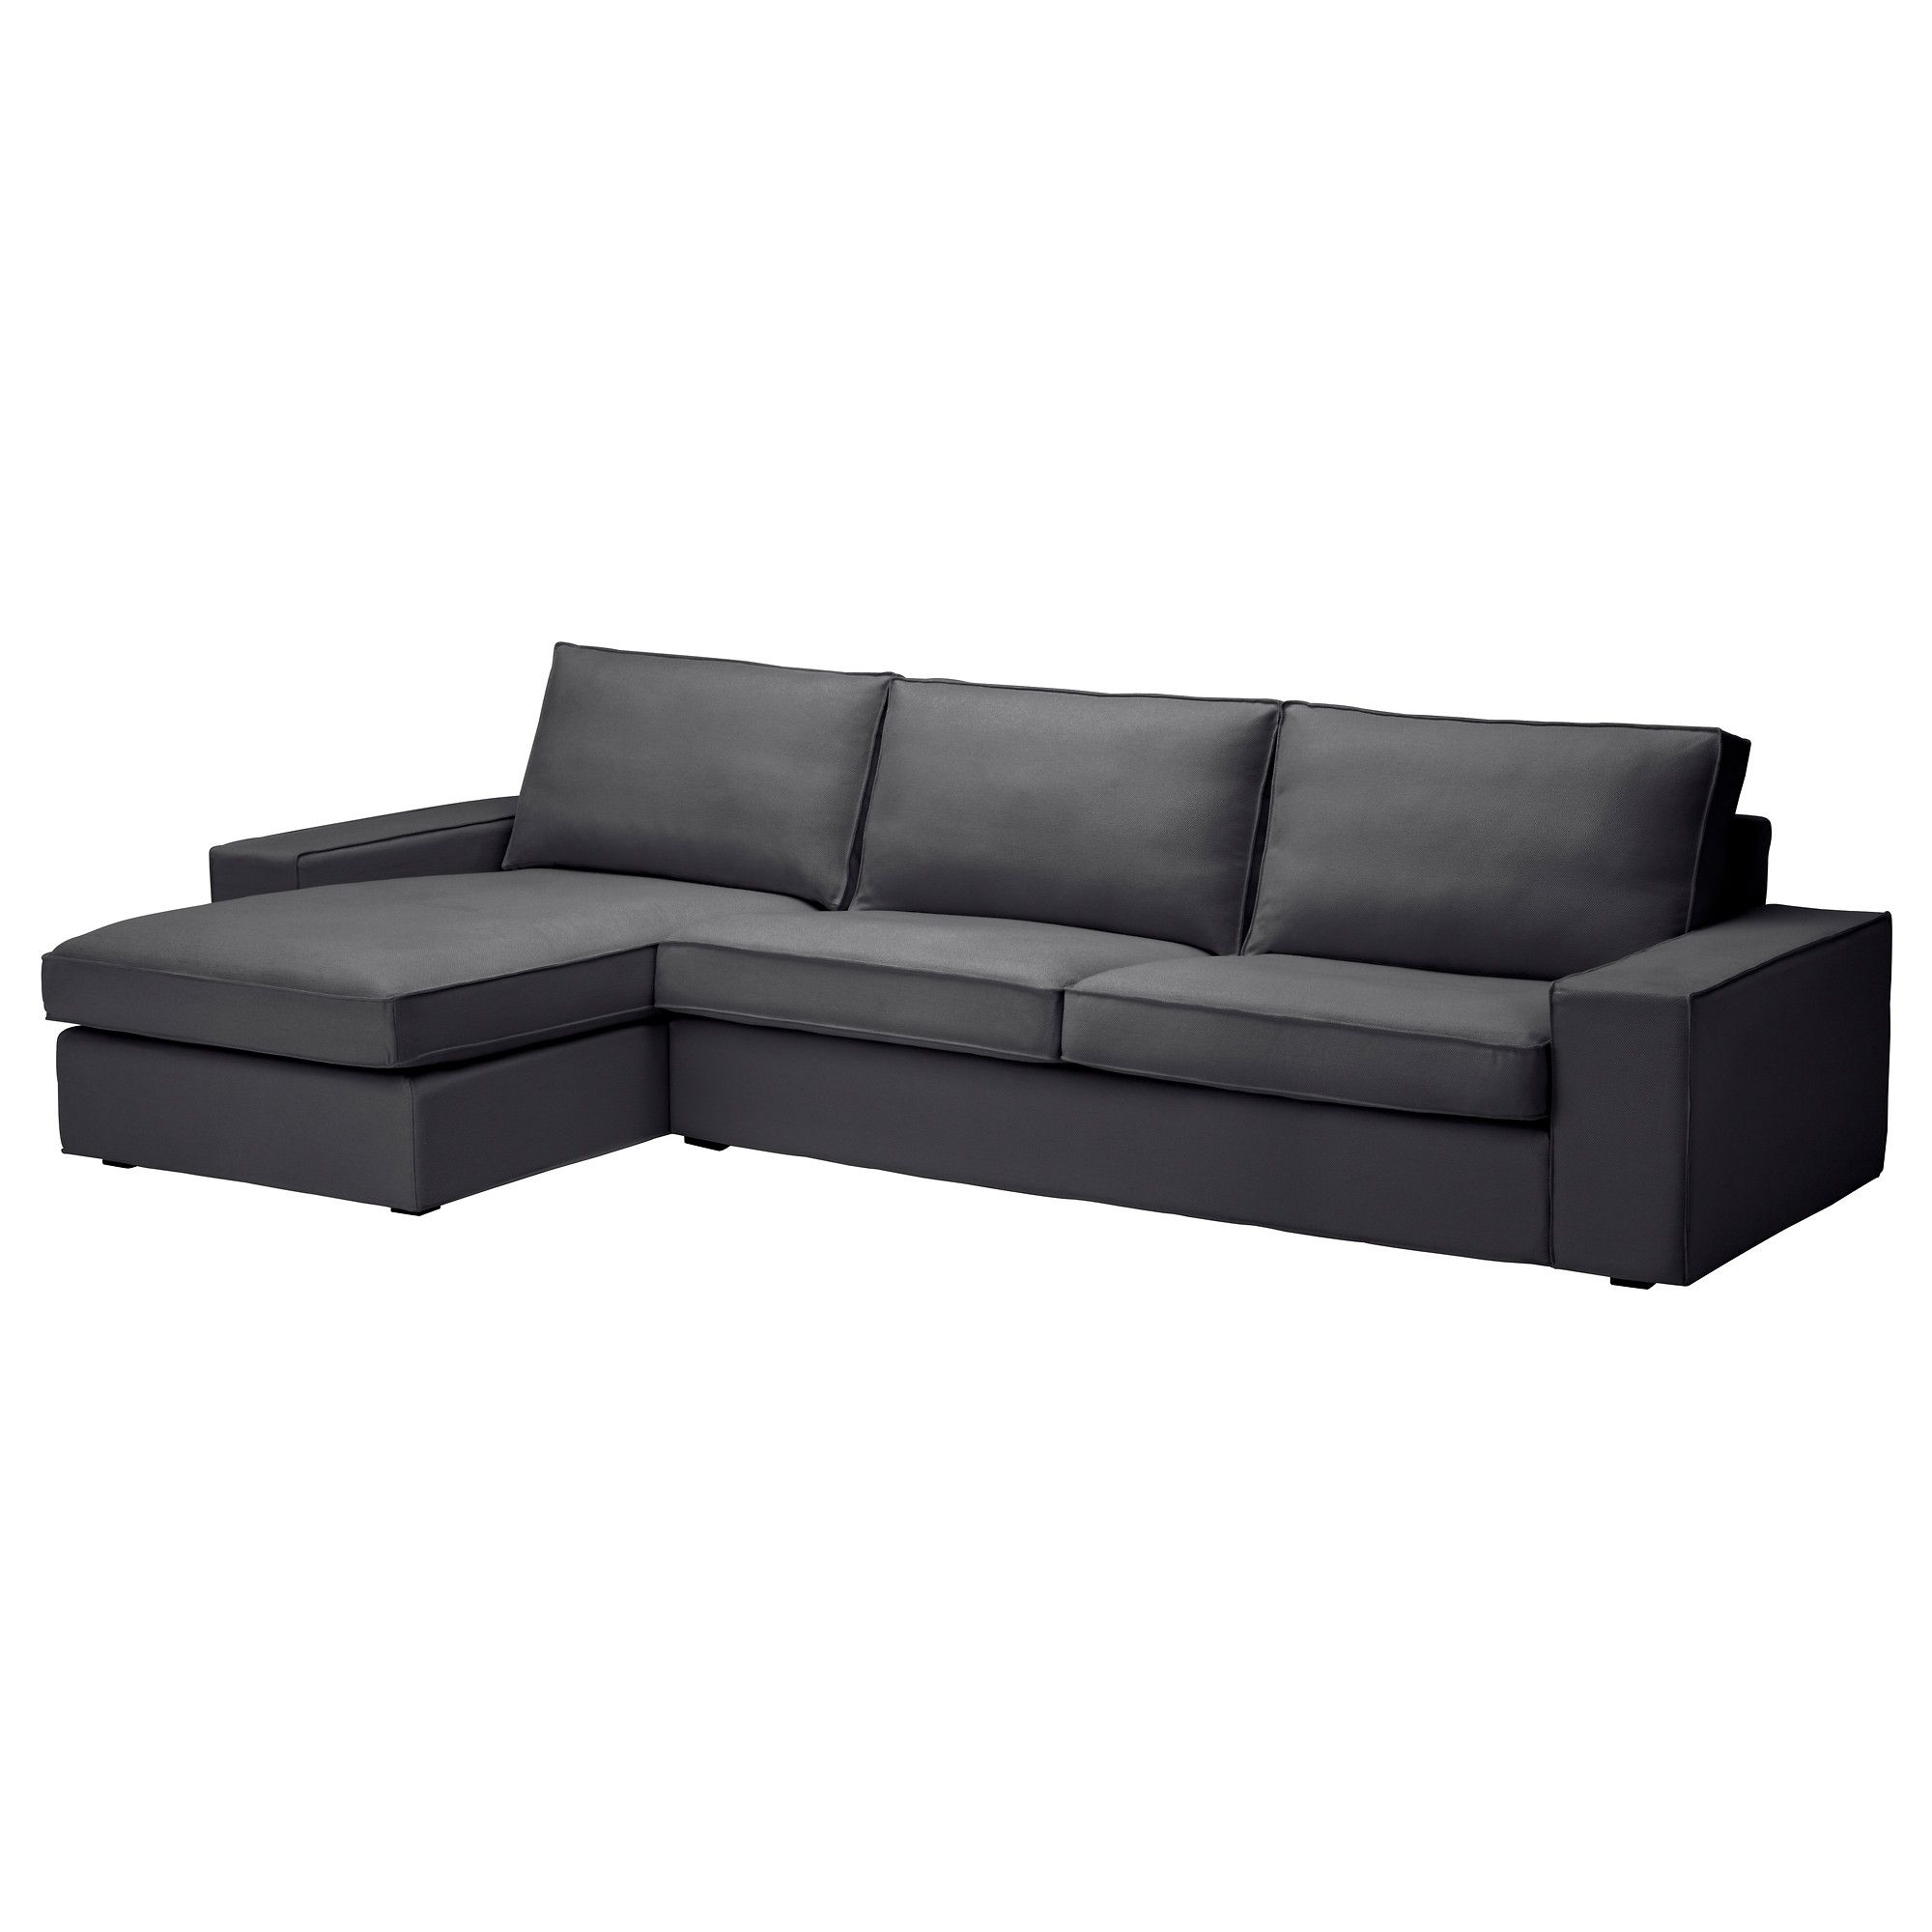 Sectional Sleeper Sofa Ikea Furniture Modern 26 – Quantiply.co Pertaining To Ikea Sectional Sleeper Sofas (Photo 9 of 10)